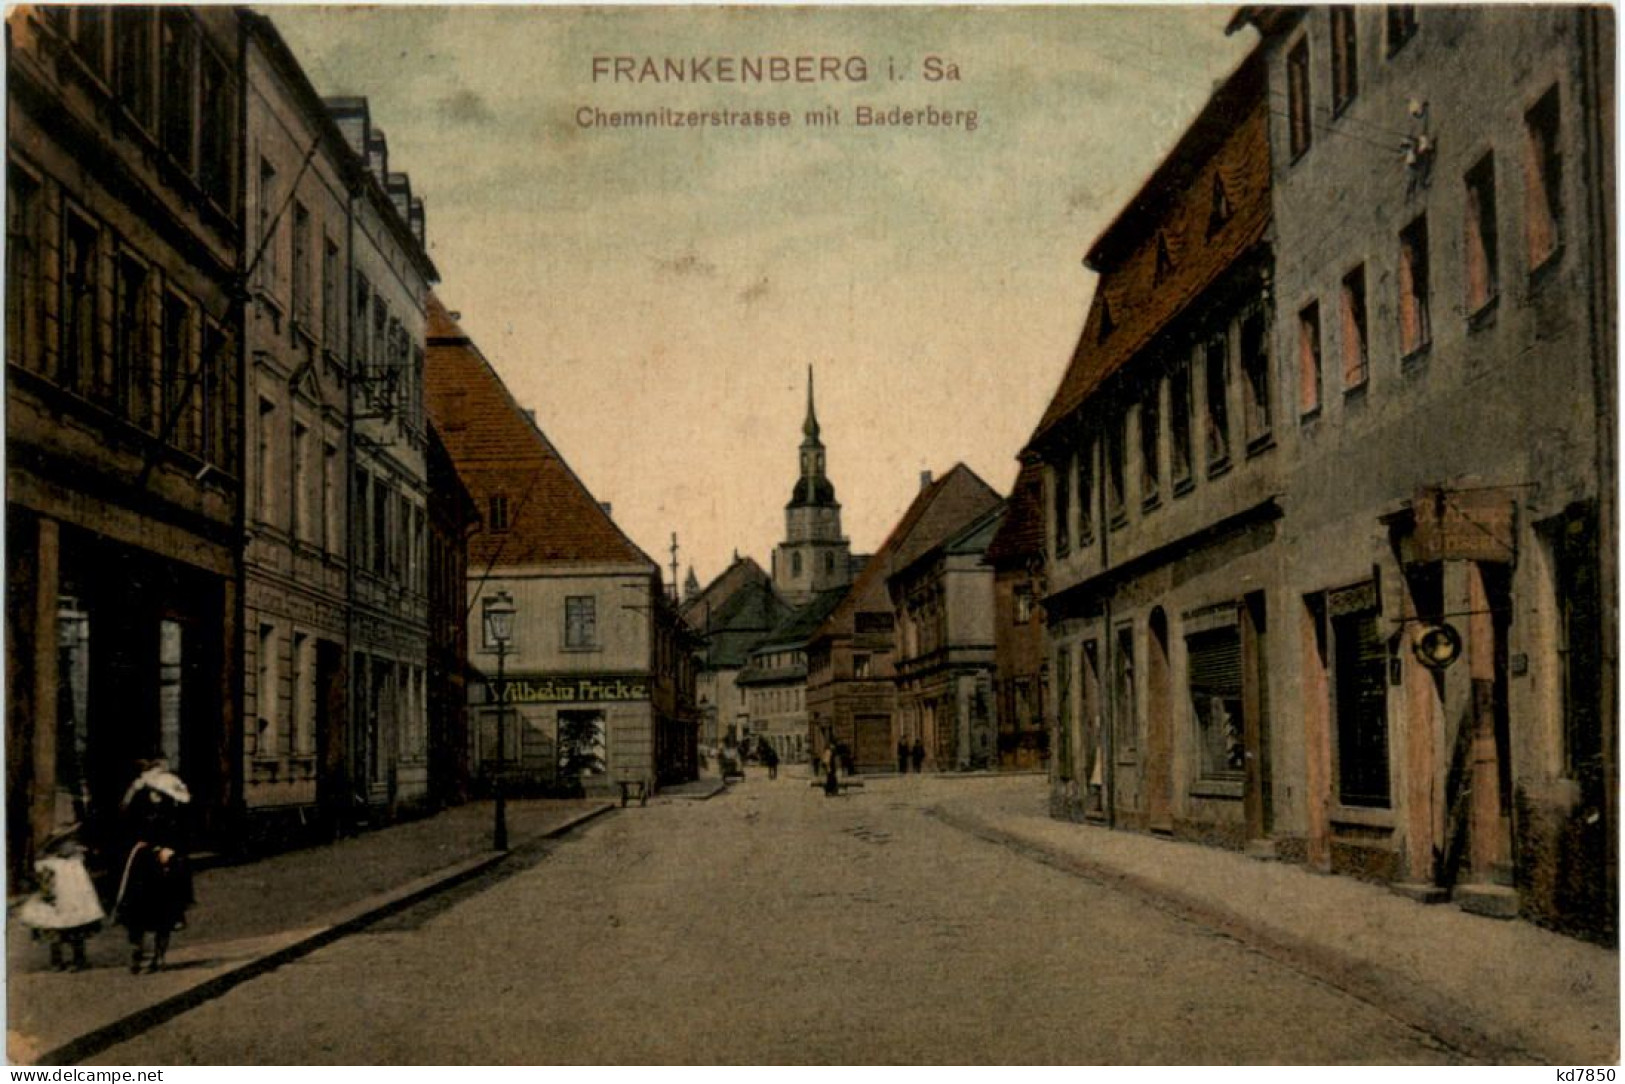 Frankenberg In Sachsen - Chemnitzerstrasse - Frankenberg